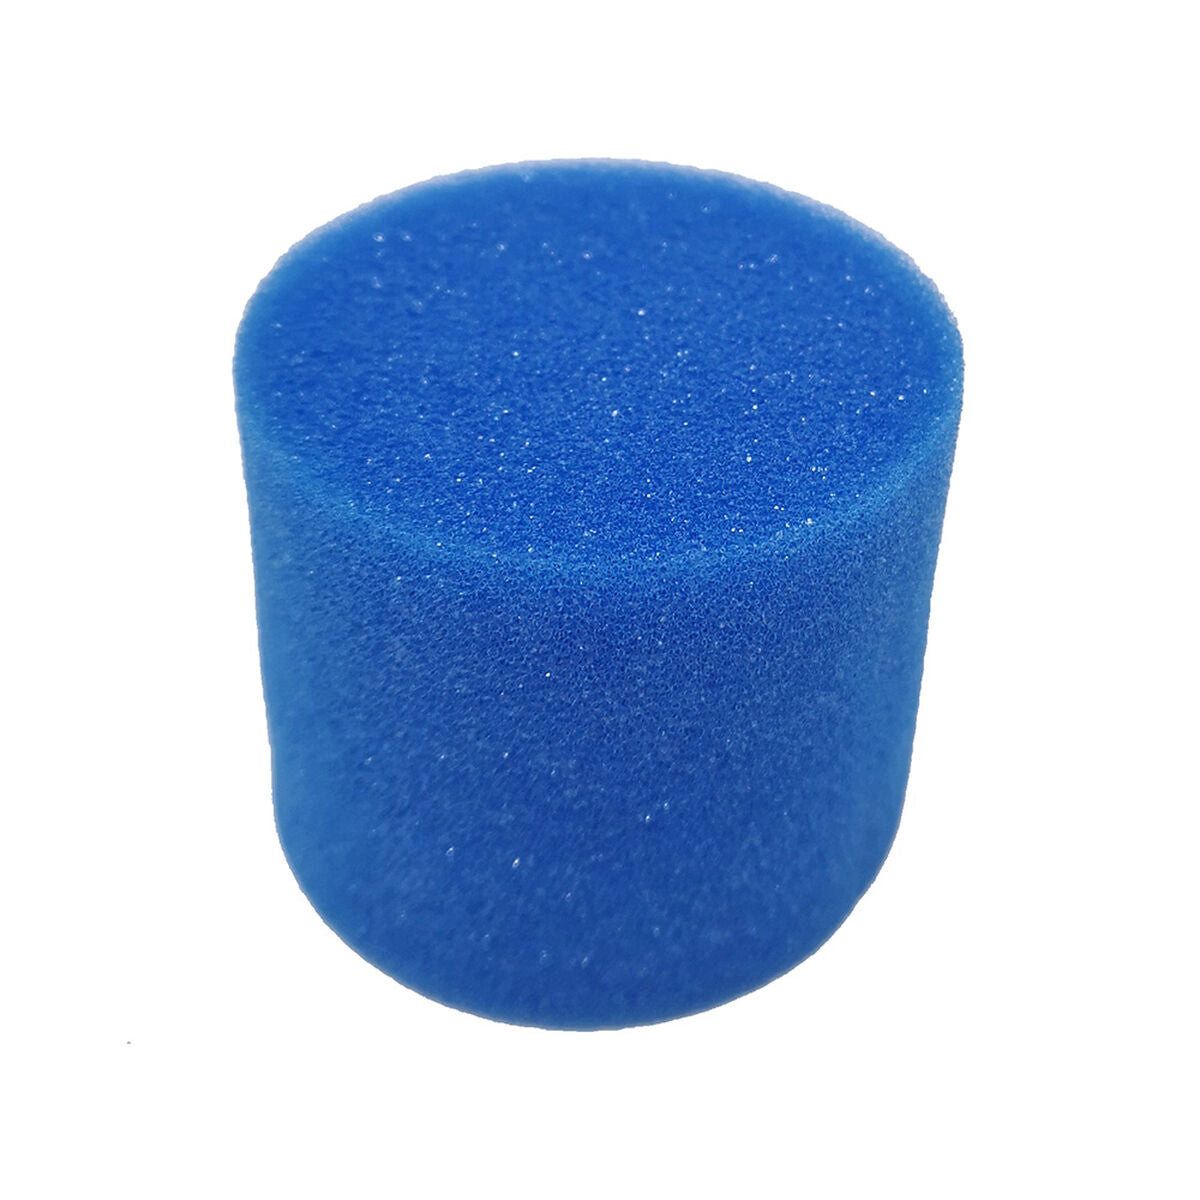 Filter Fagor fge120 - 78402 Spare part Handle vacuum cleaner Blue Sponge